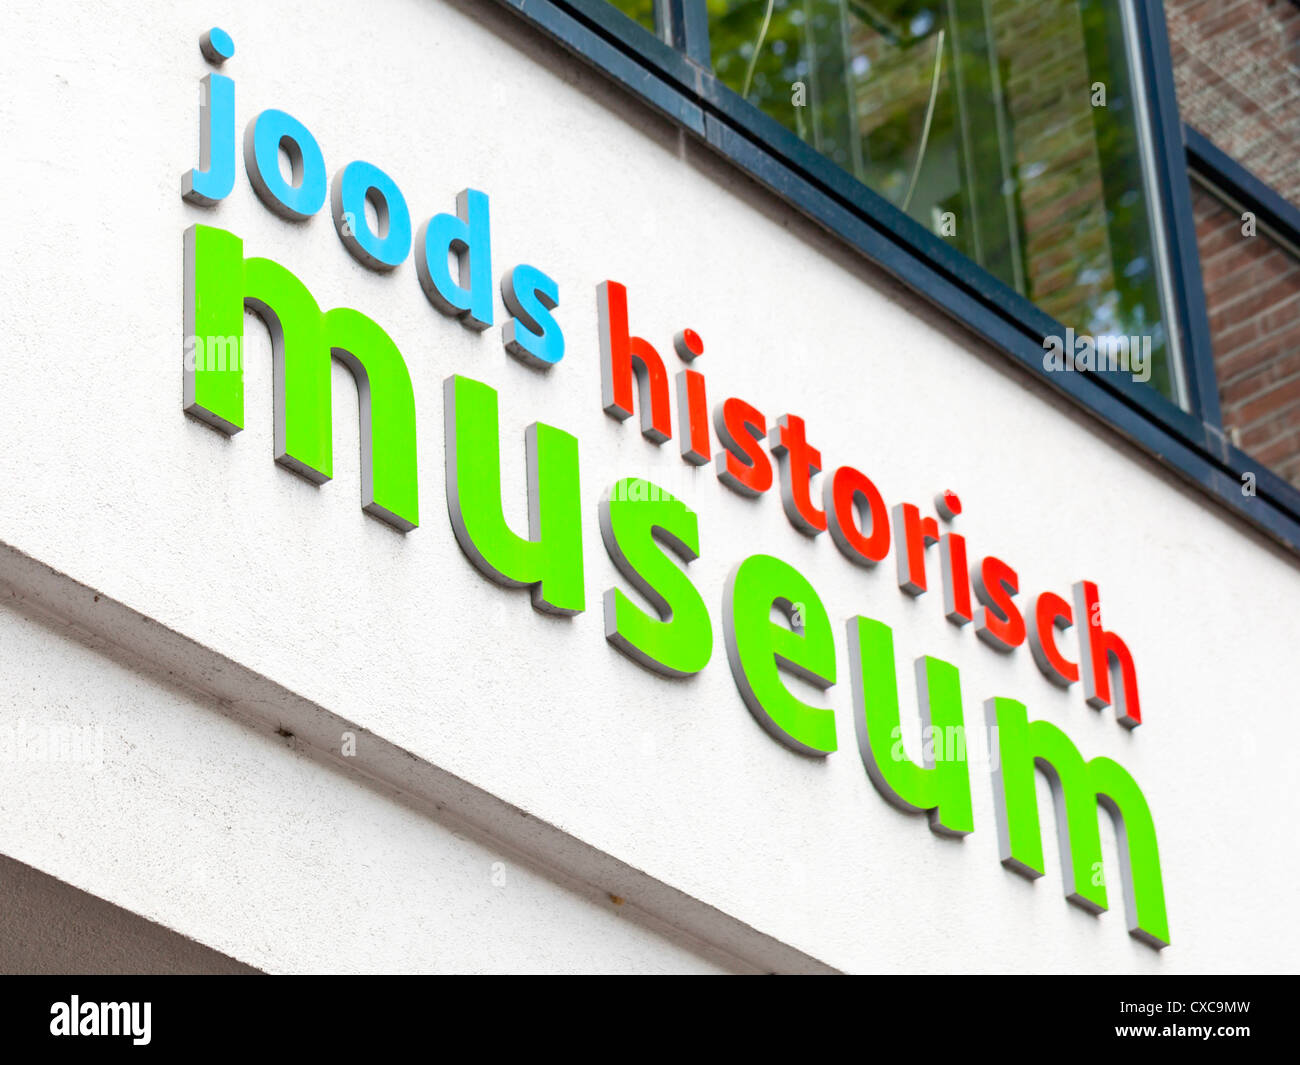 Amsterdam: Joods historisch museum (Jewish historical museum) - Amsterdam, Netherlands, Europe Stock Photo